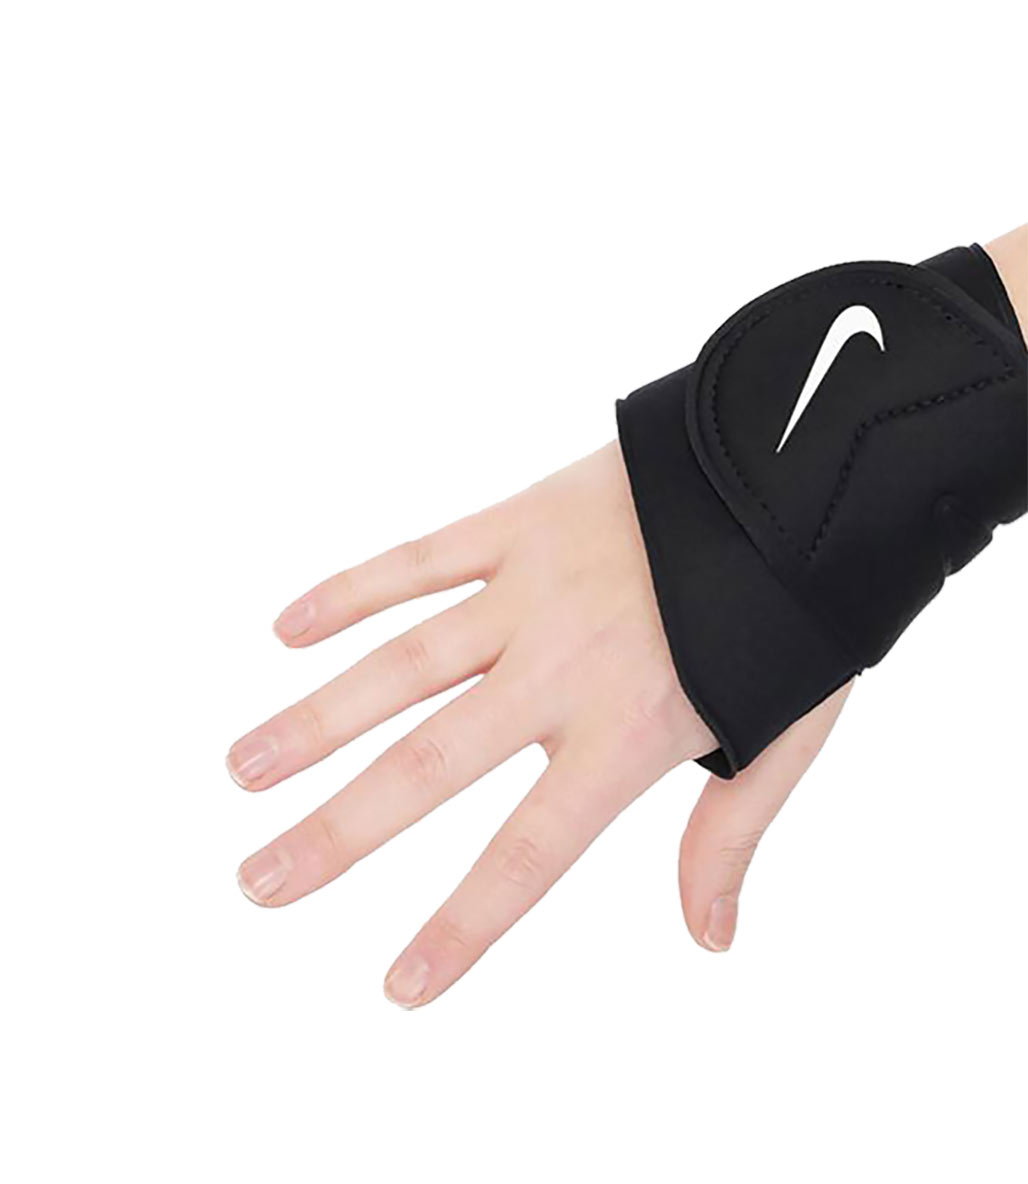 Nike Pro Wrist And Thumb Wrap 3.0 Bileklik Siyah